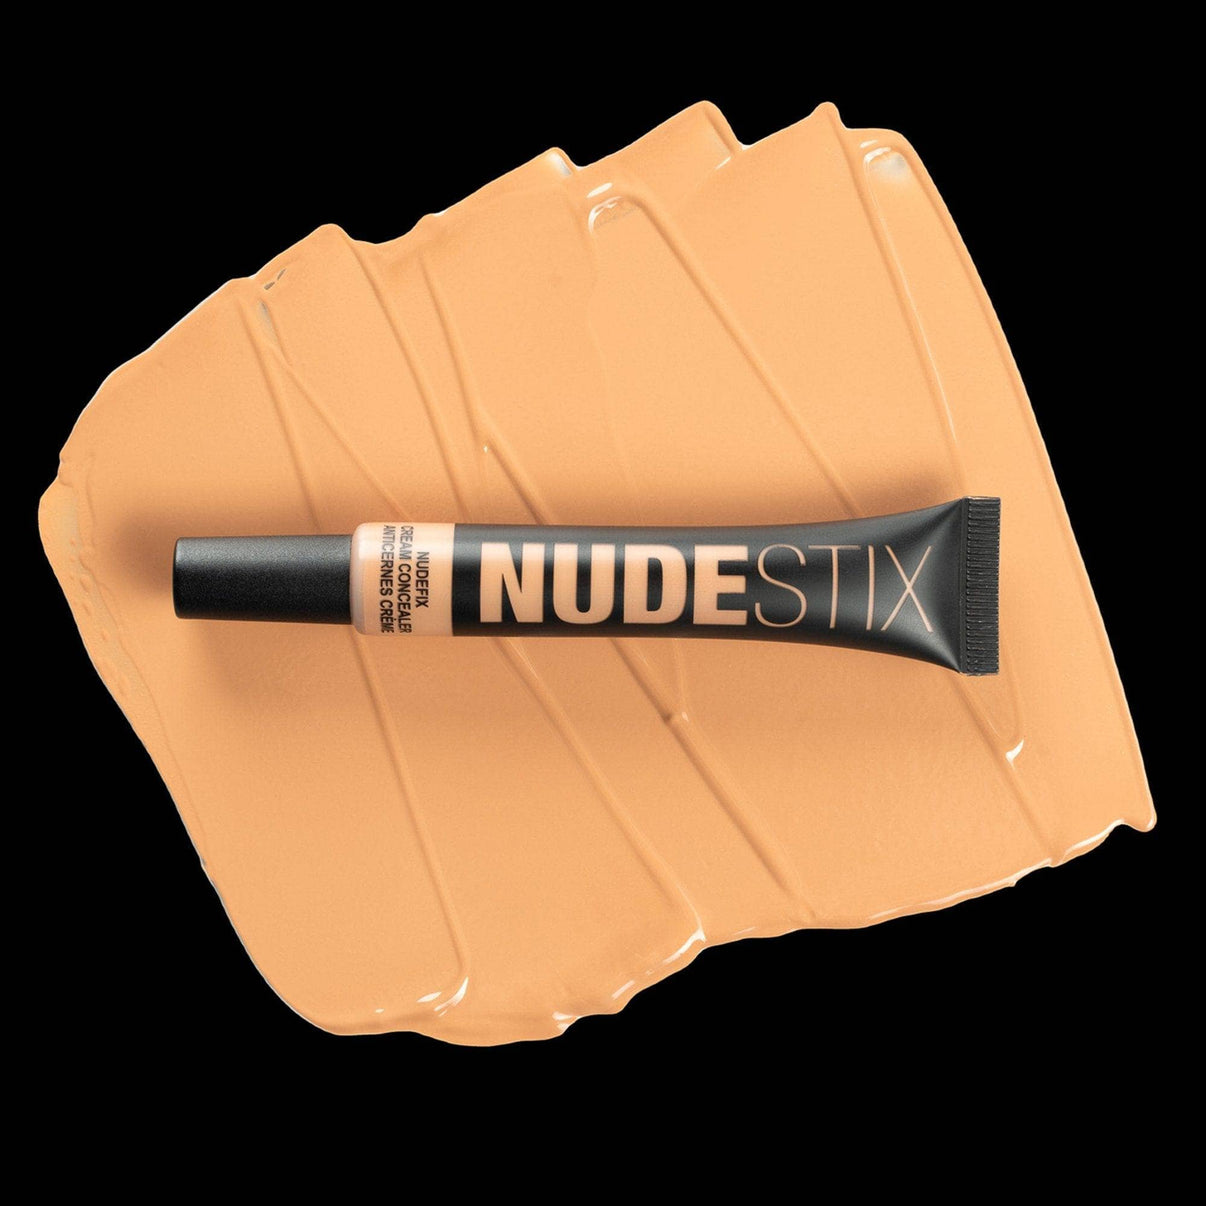 Nudefix cream concealer in shade nude 5.5 on top of texture swatch